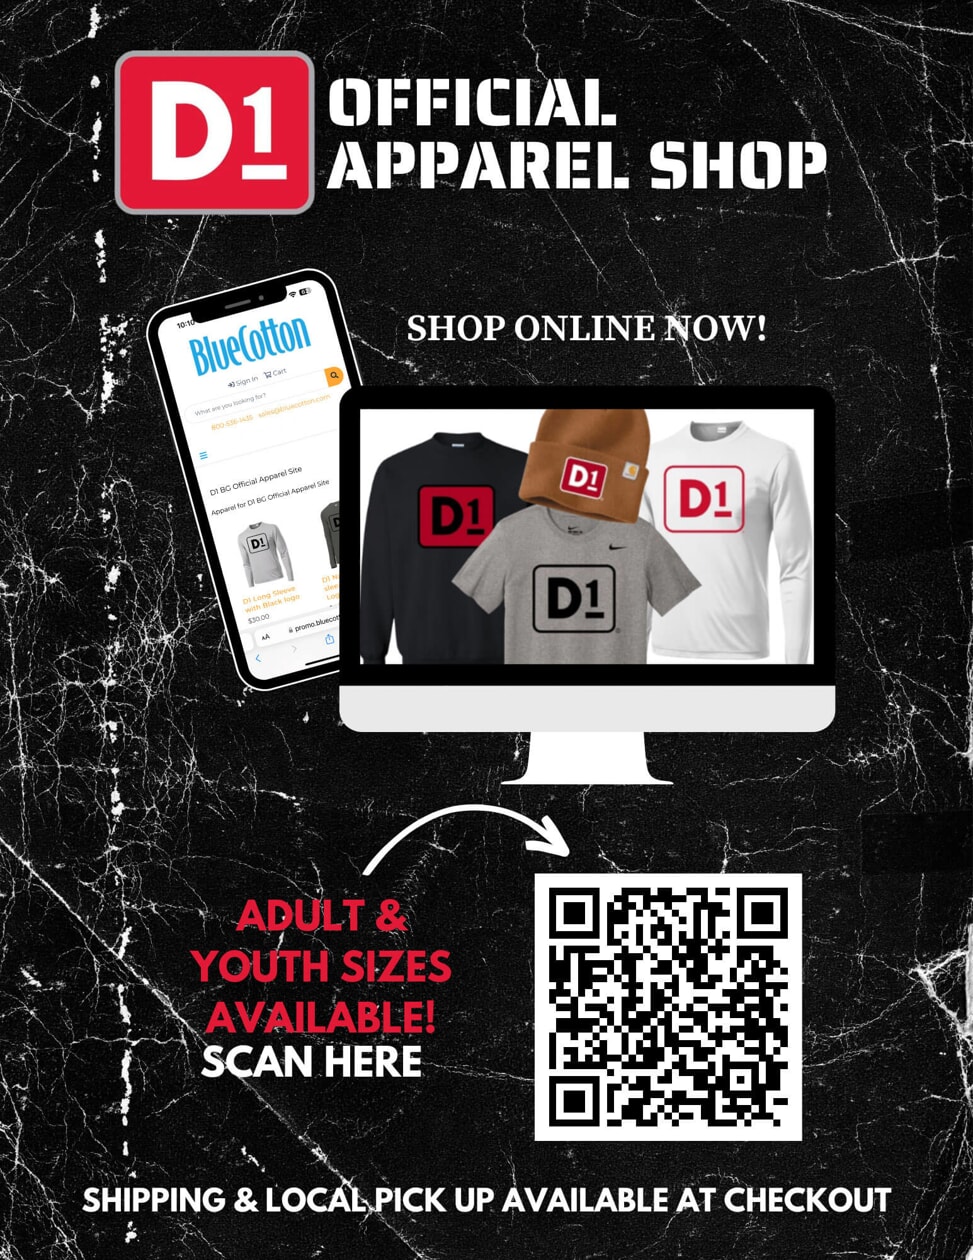 D1 Official Apparel shop flyer with QR code